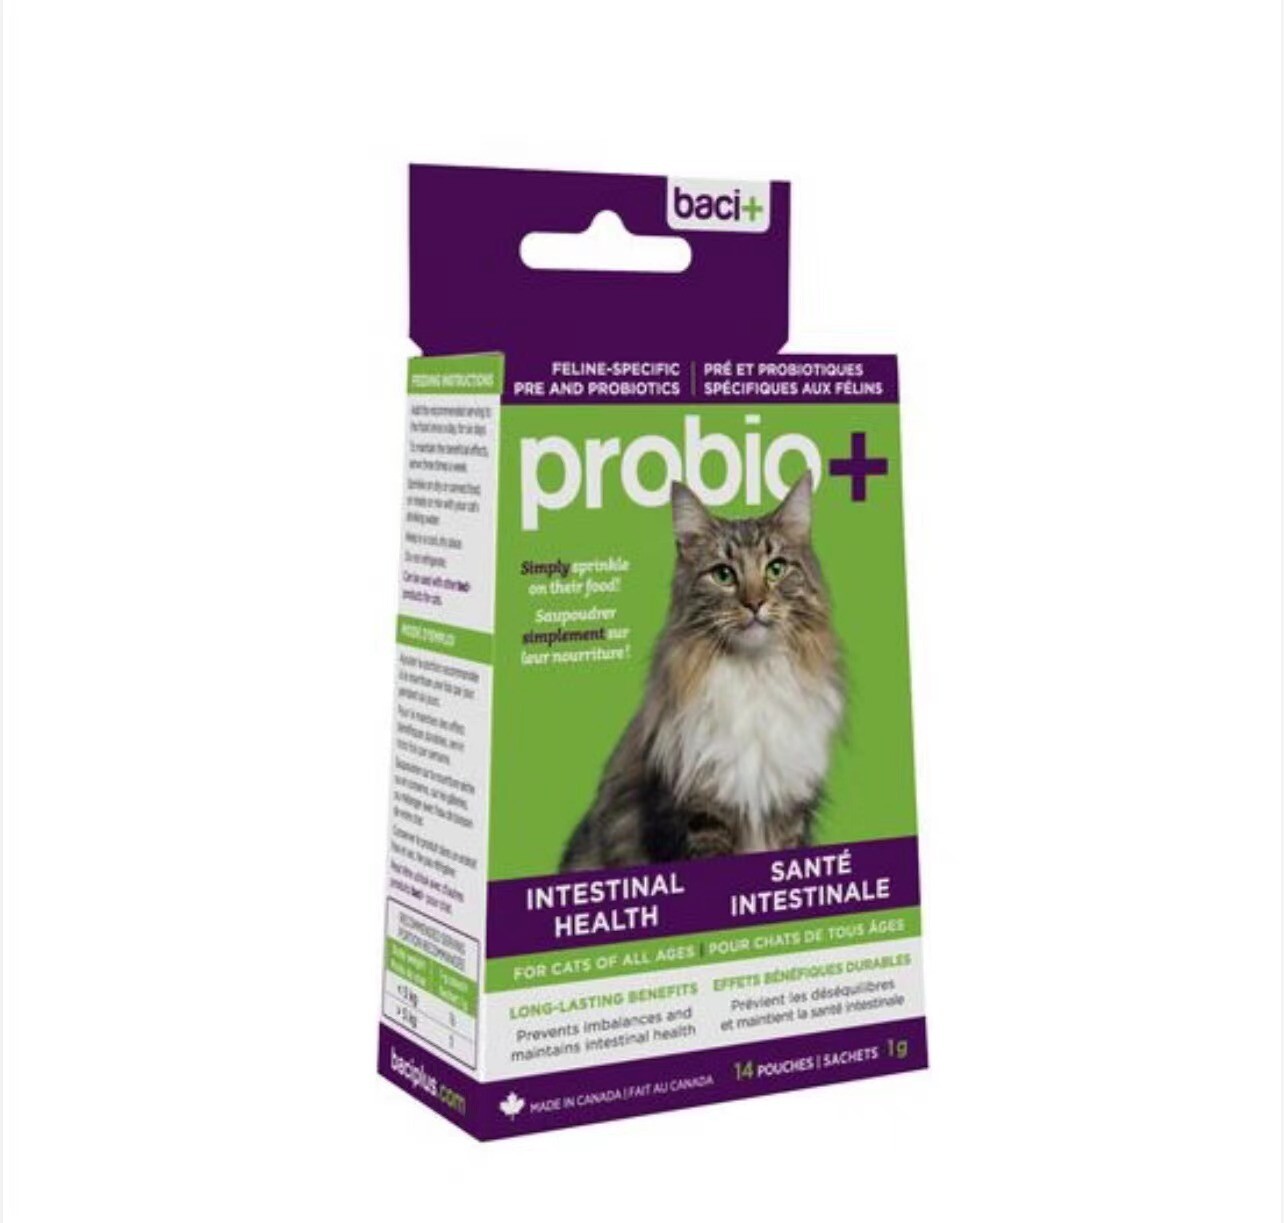 Baci+probio+ PRE AND PROBIOTICS  For CATS